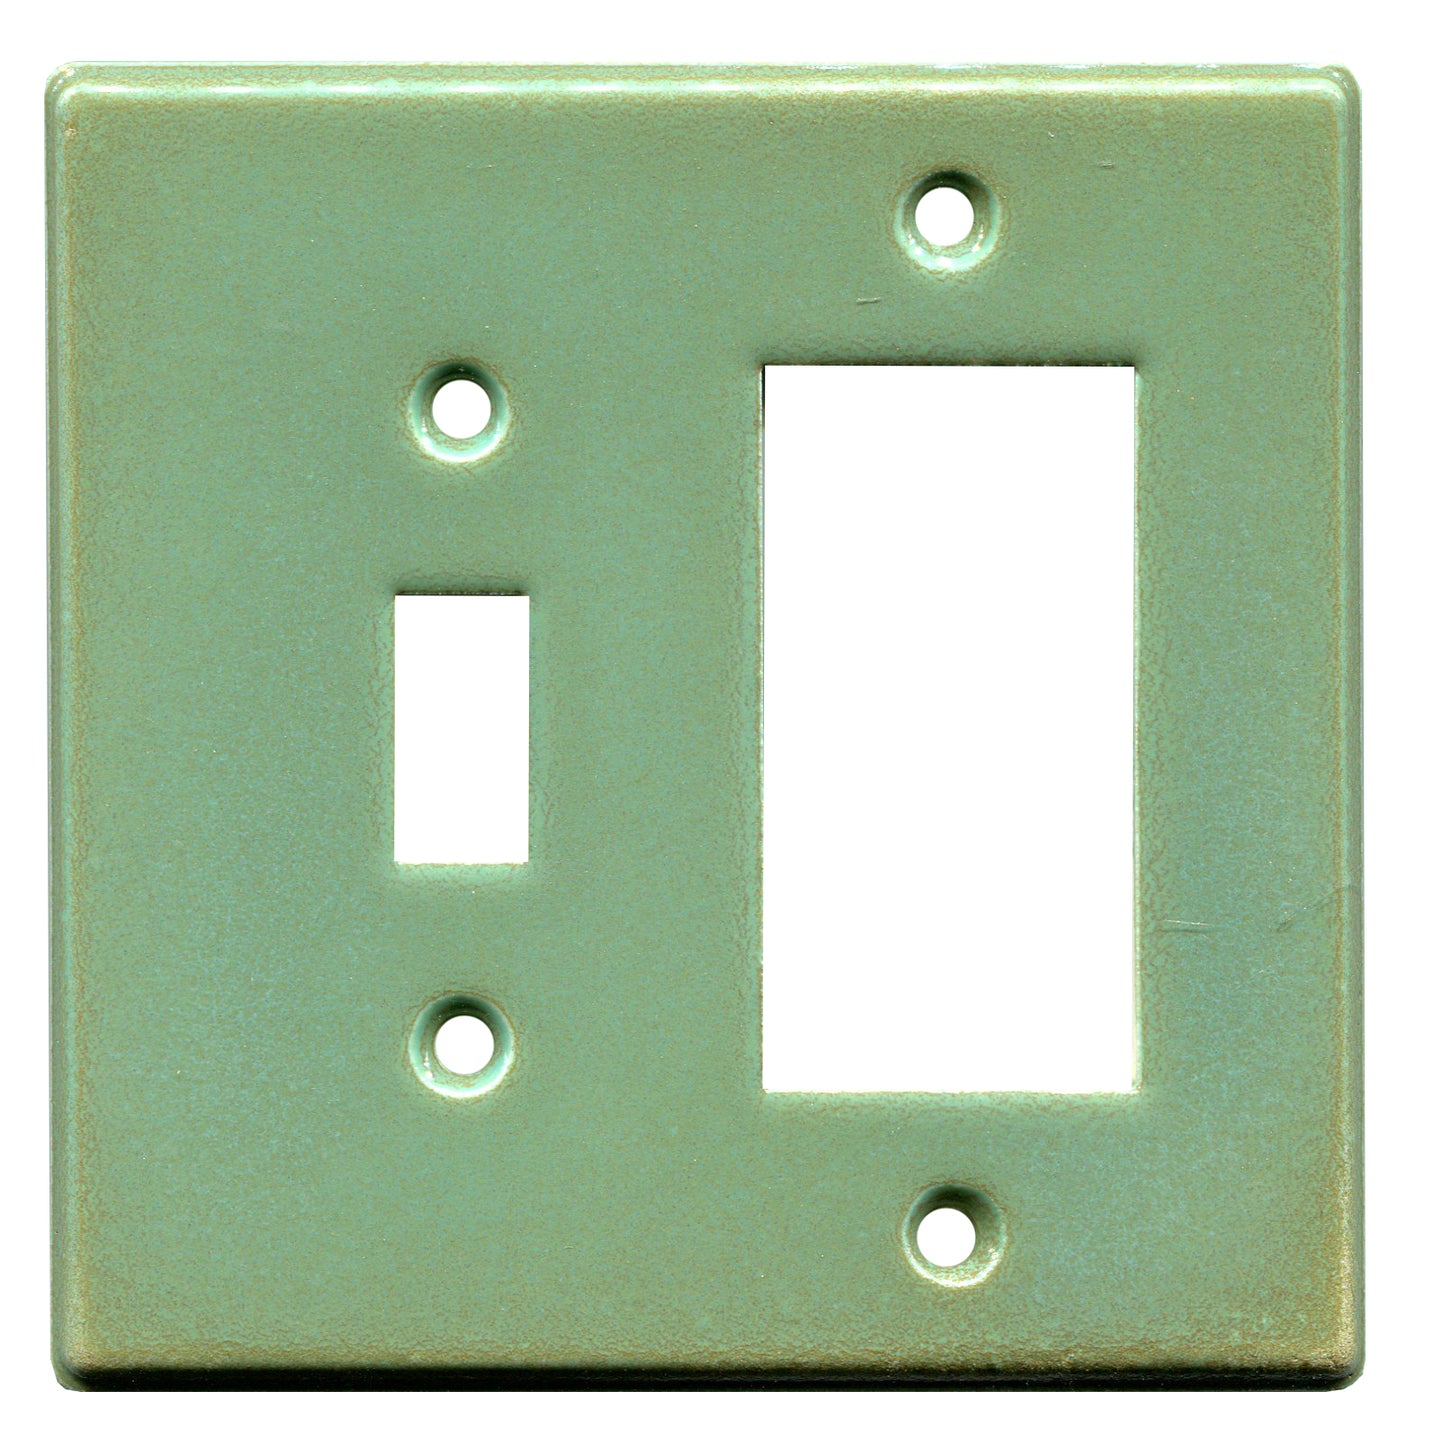 Wasabi switch/GFI green ceramic plate